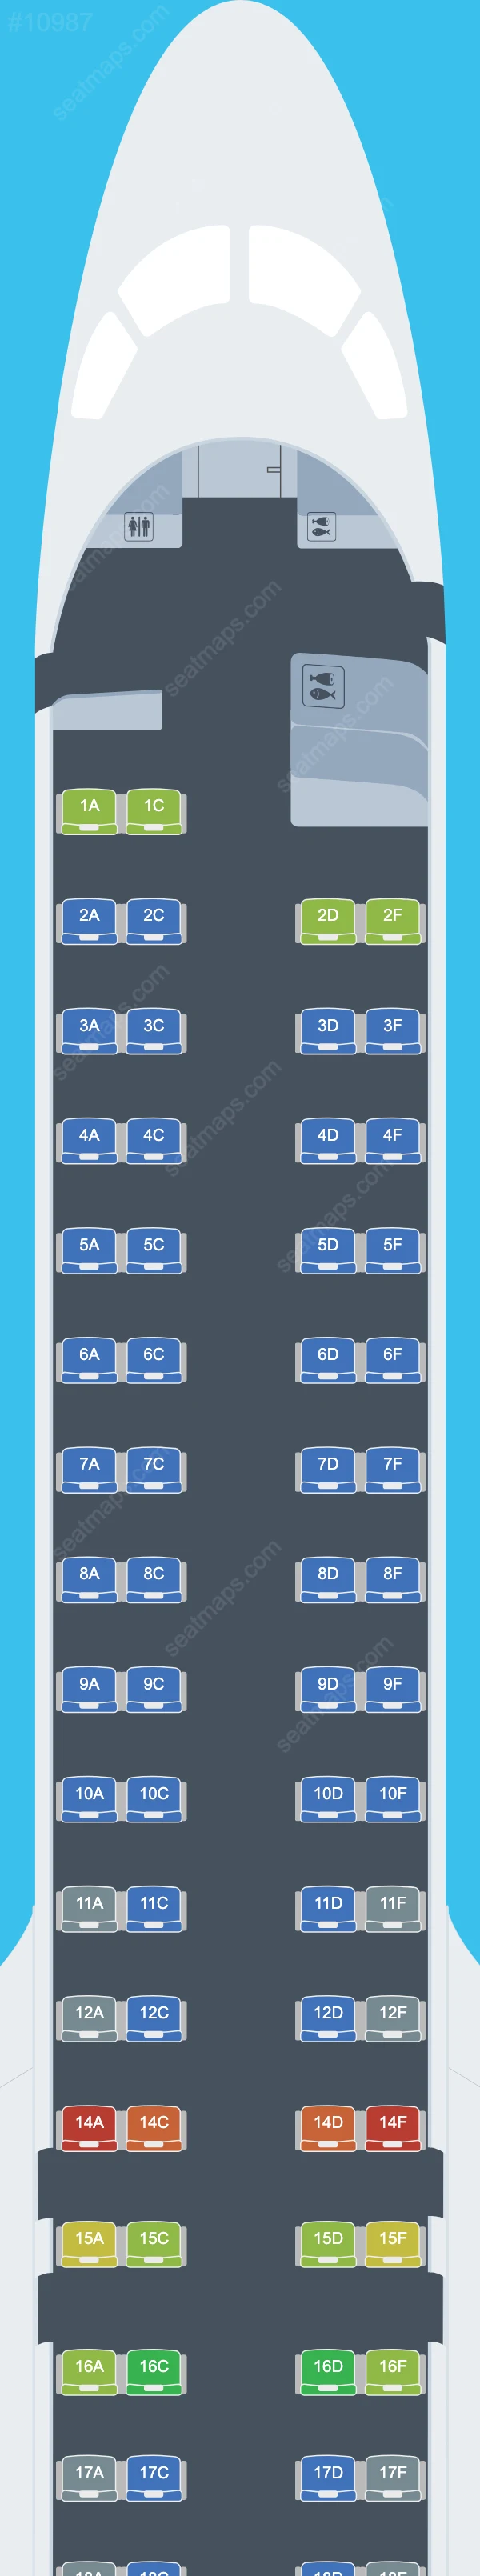 Swiss Embraer E195-E2 Seat Maps E195 E2